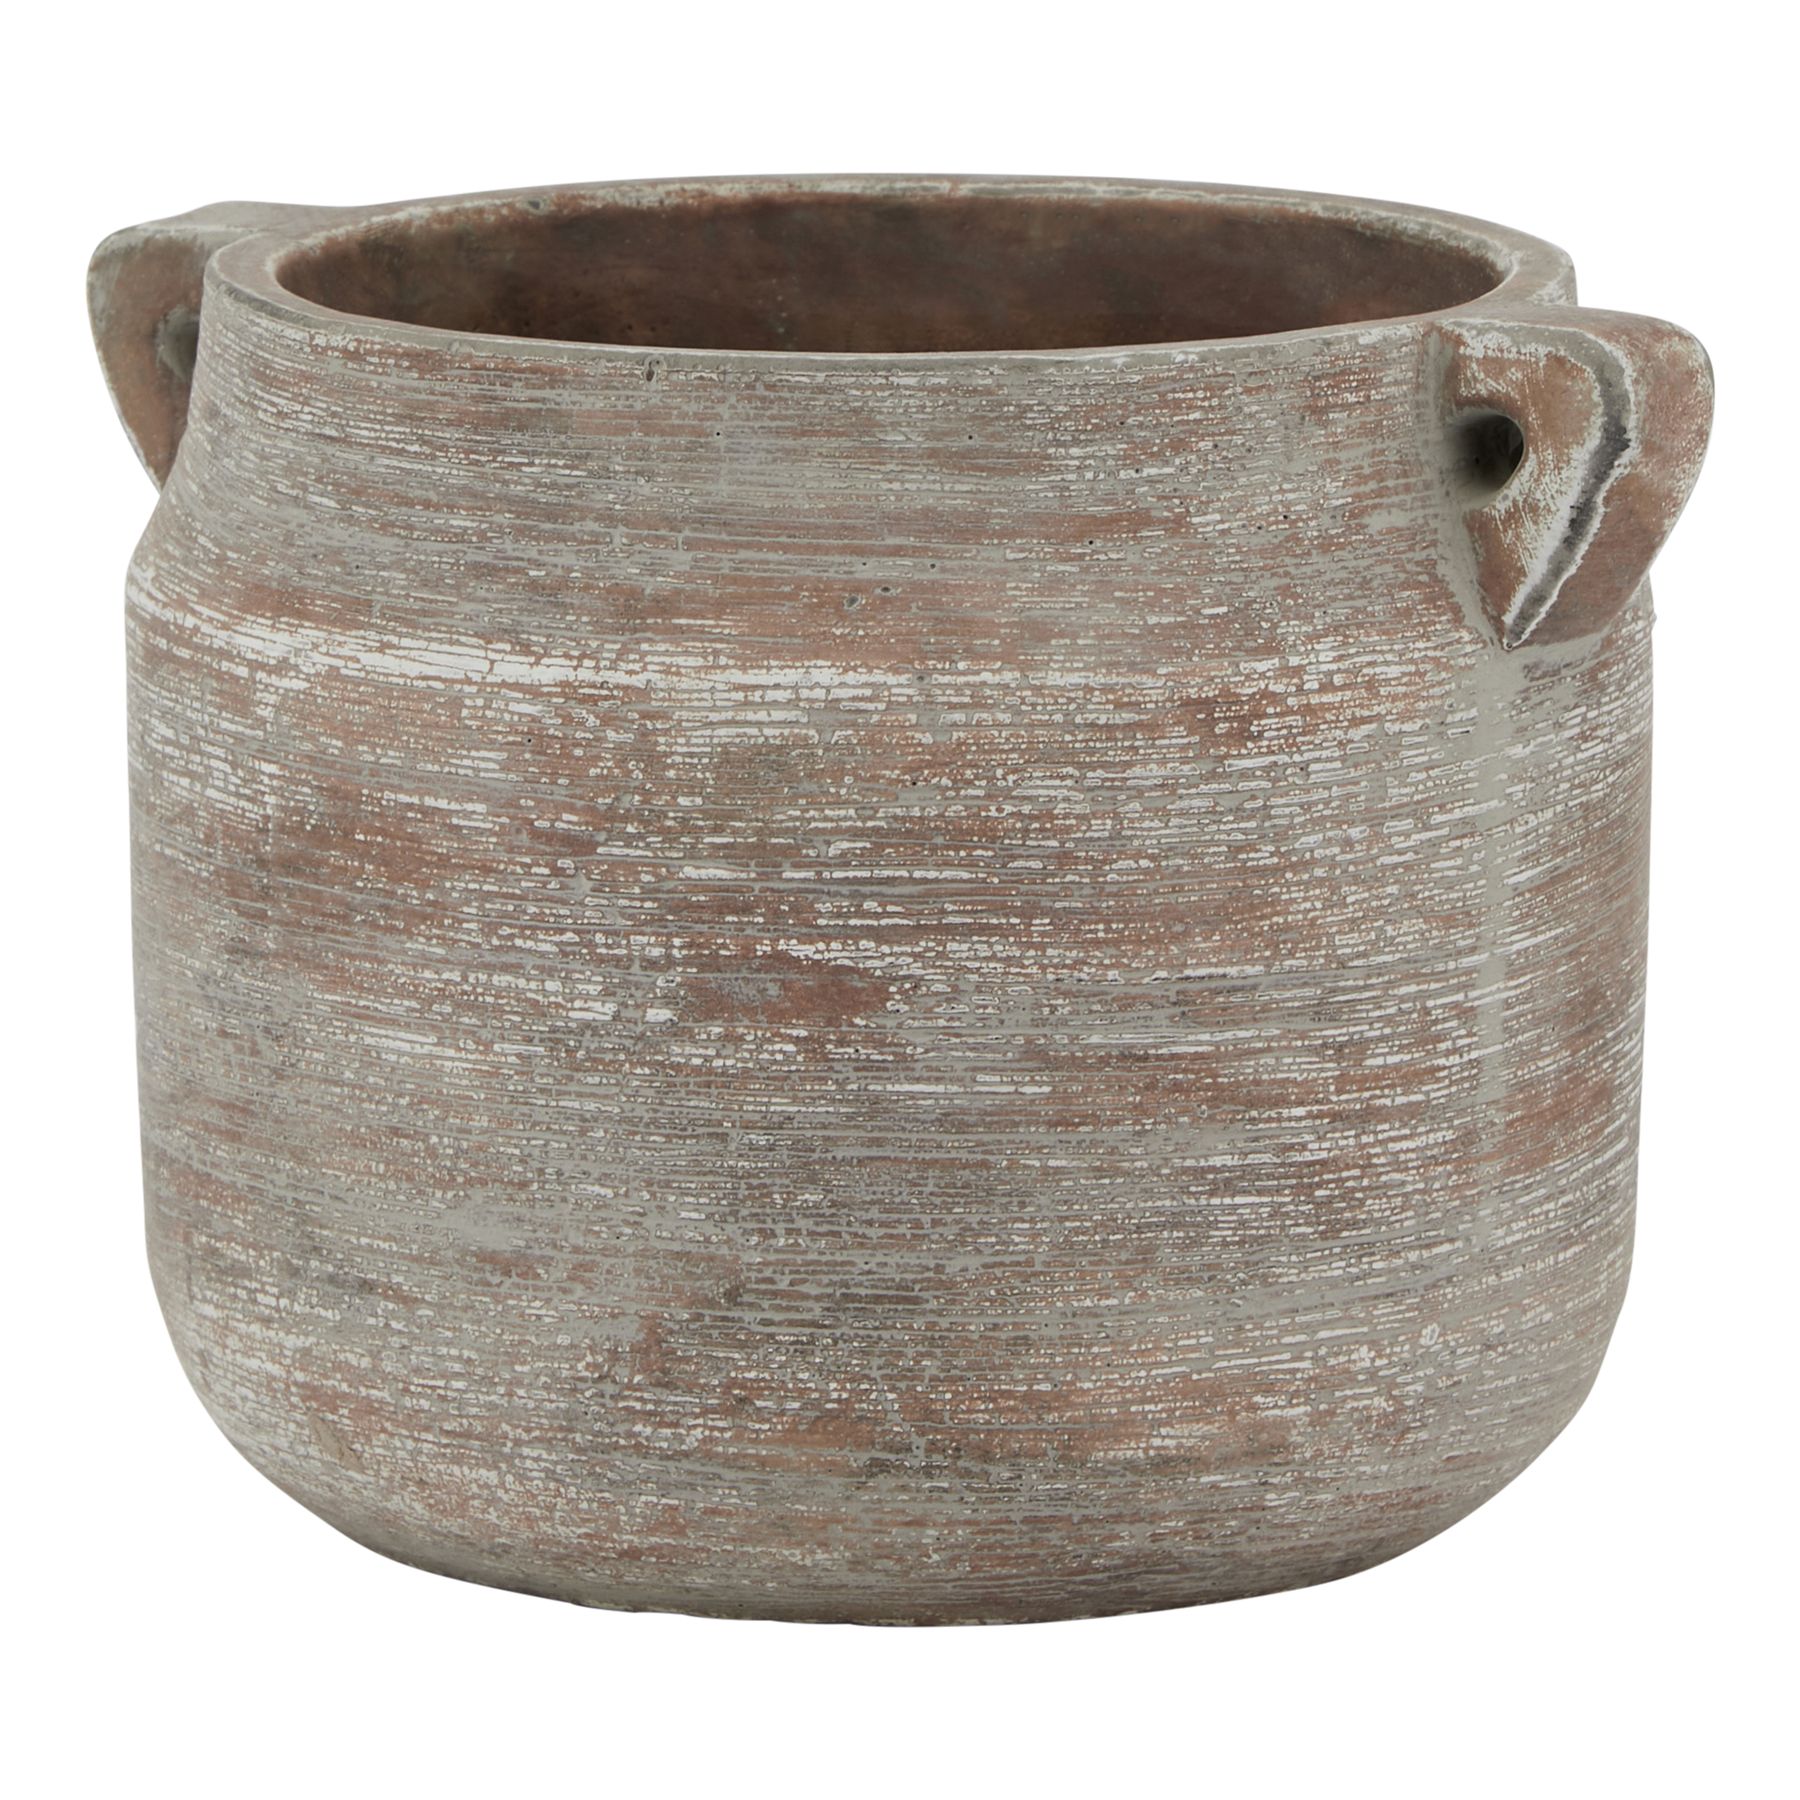 Siena Brown Hydria Pot - Image 1